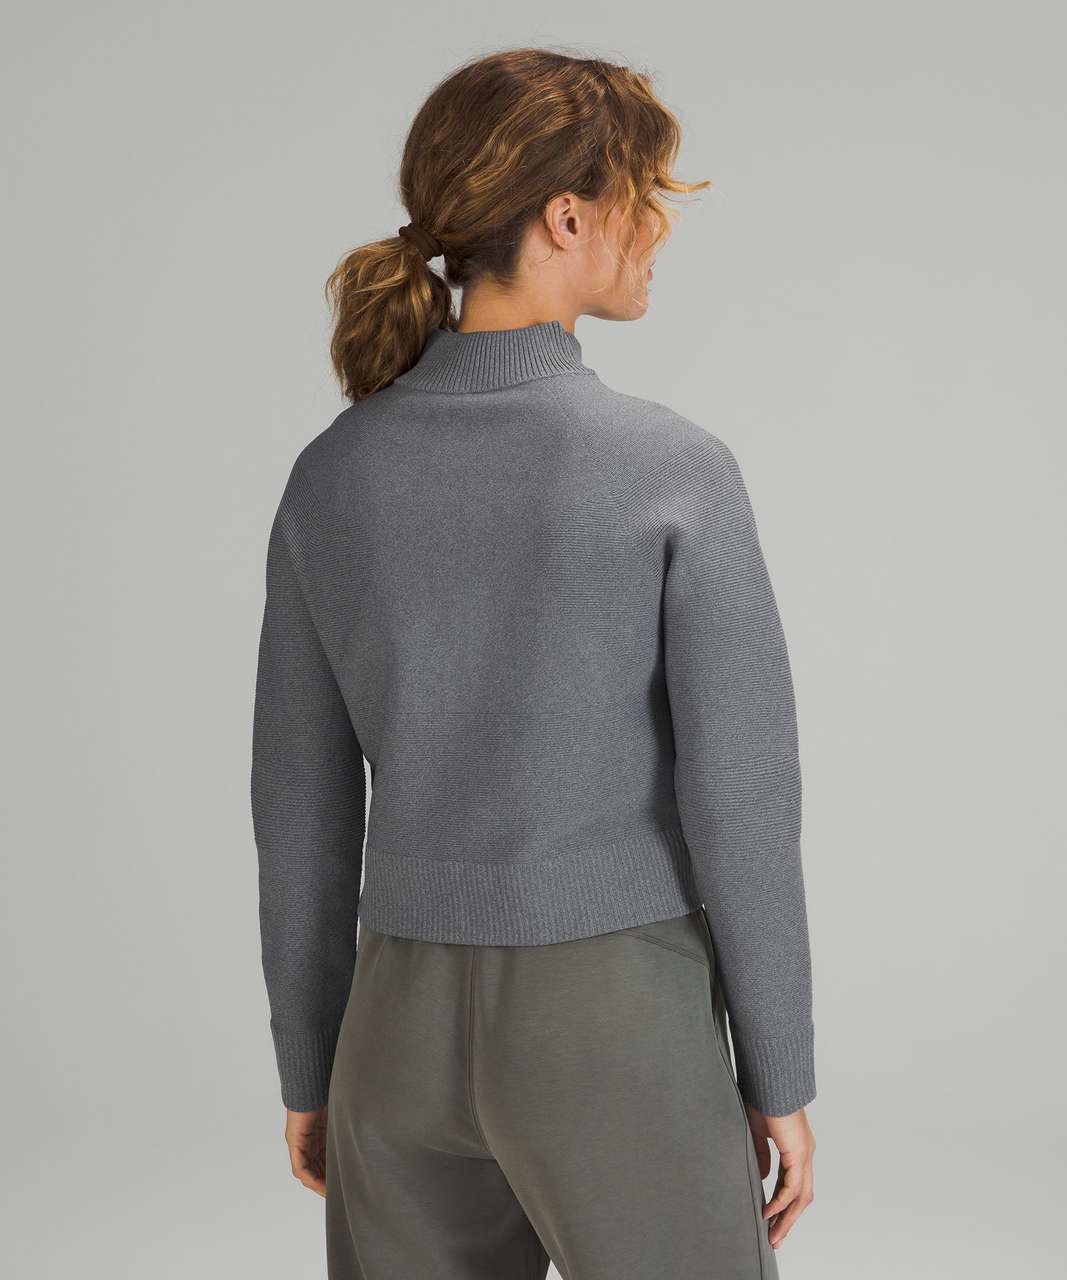 Lululemon All Around Full Zip Sweater - Rhino Grey / Asphalt Grey